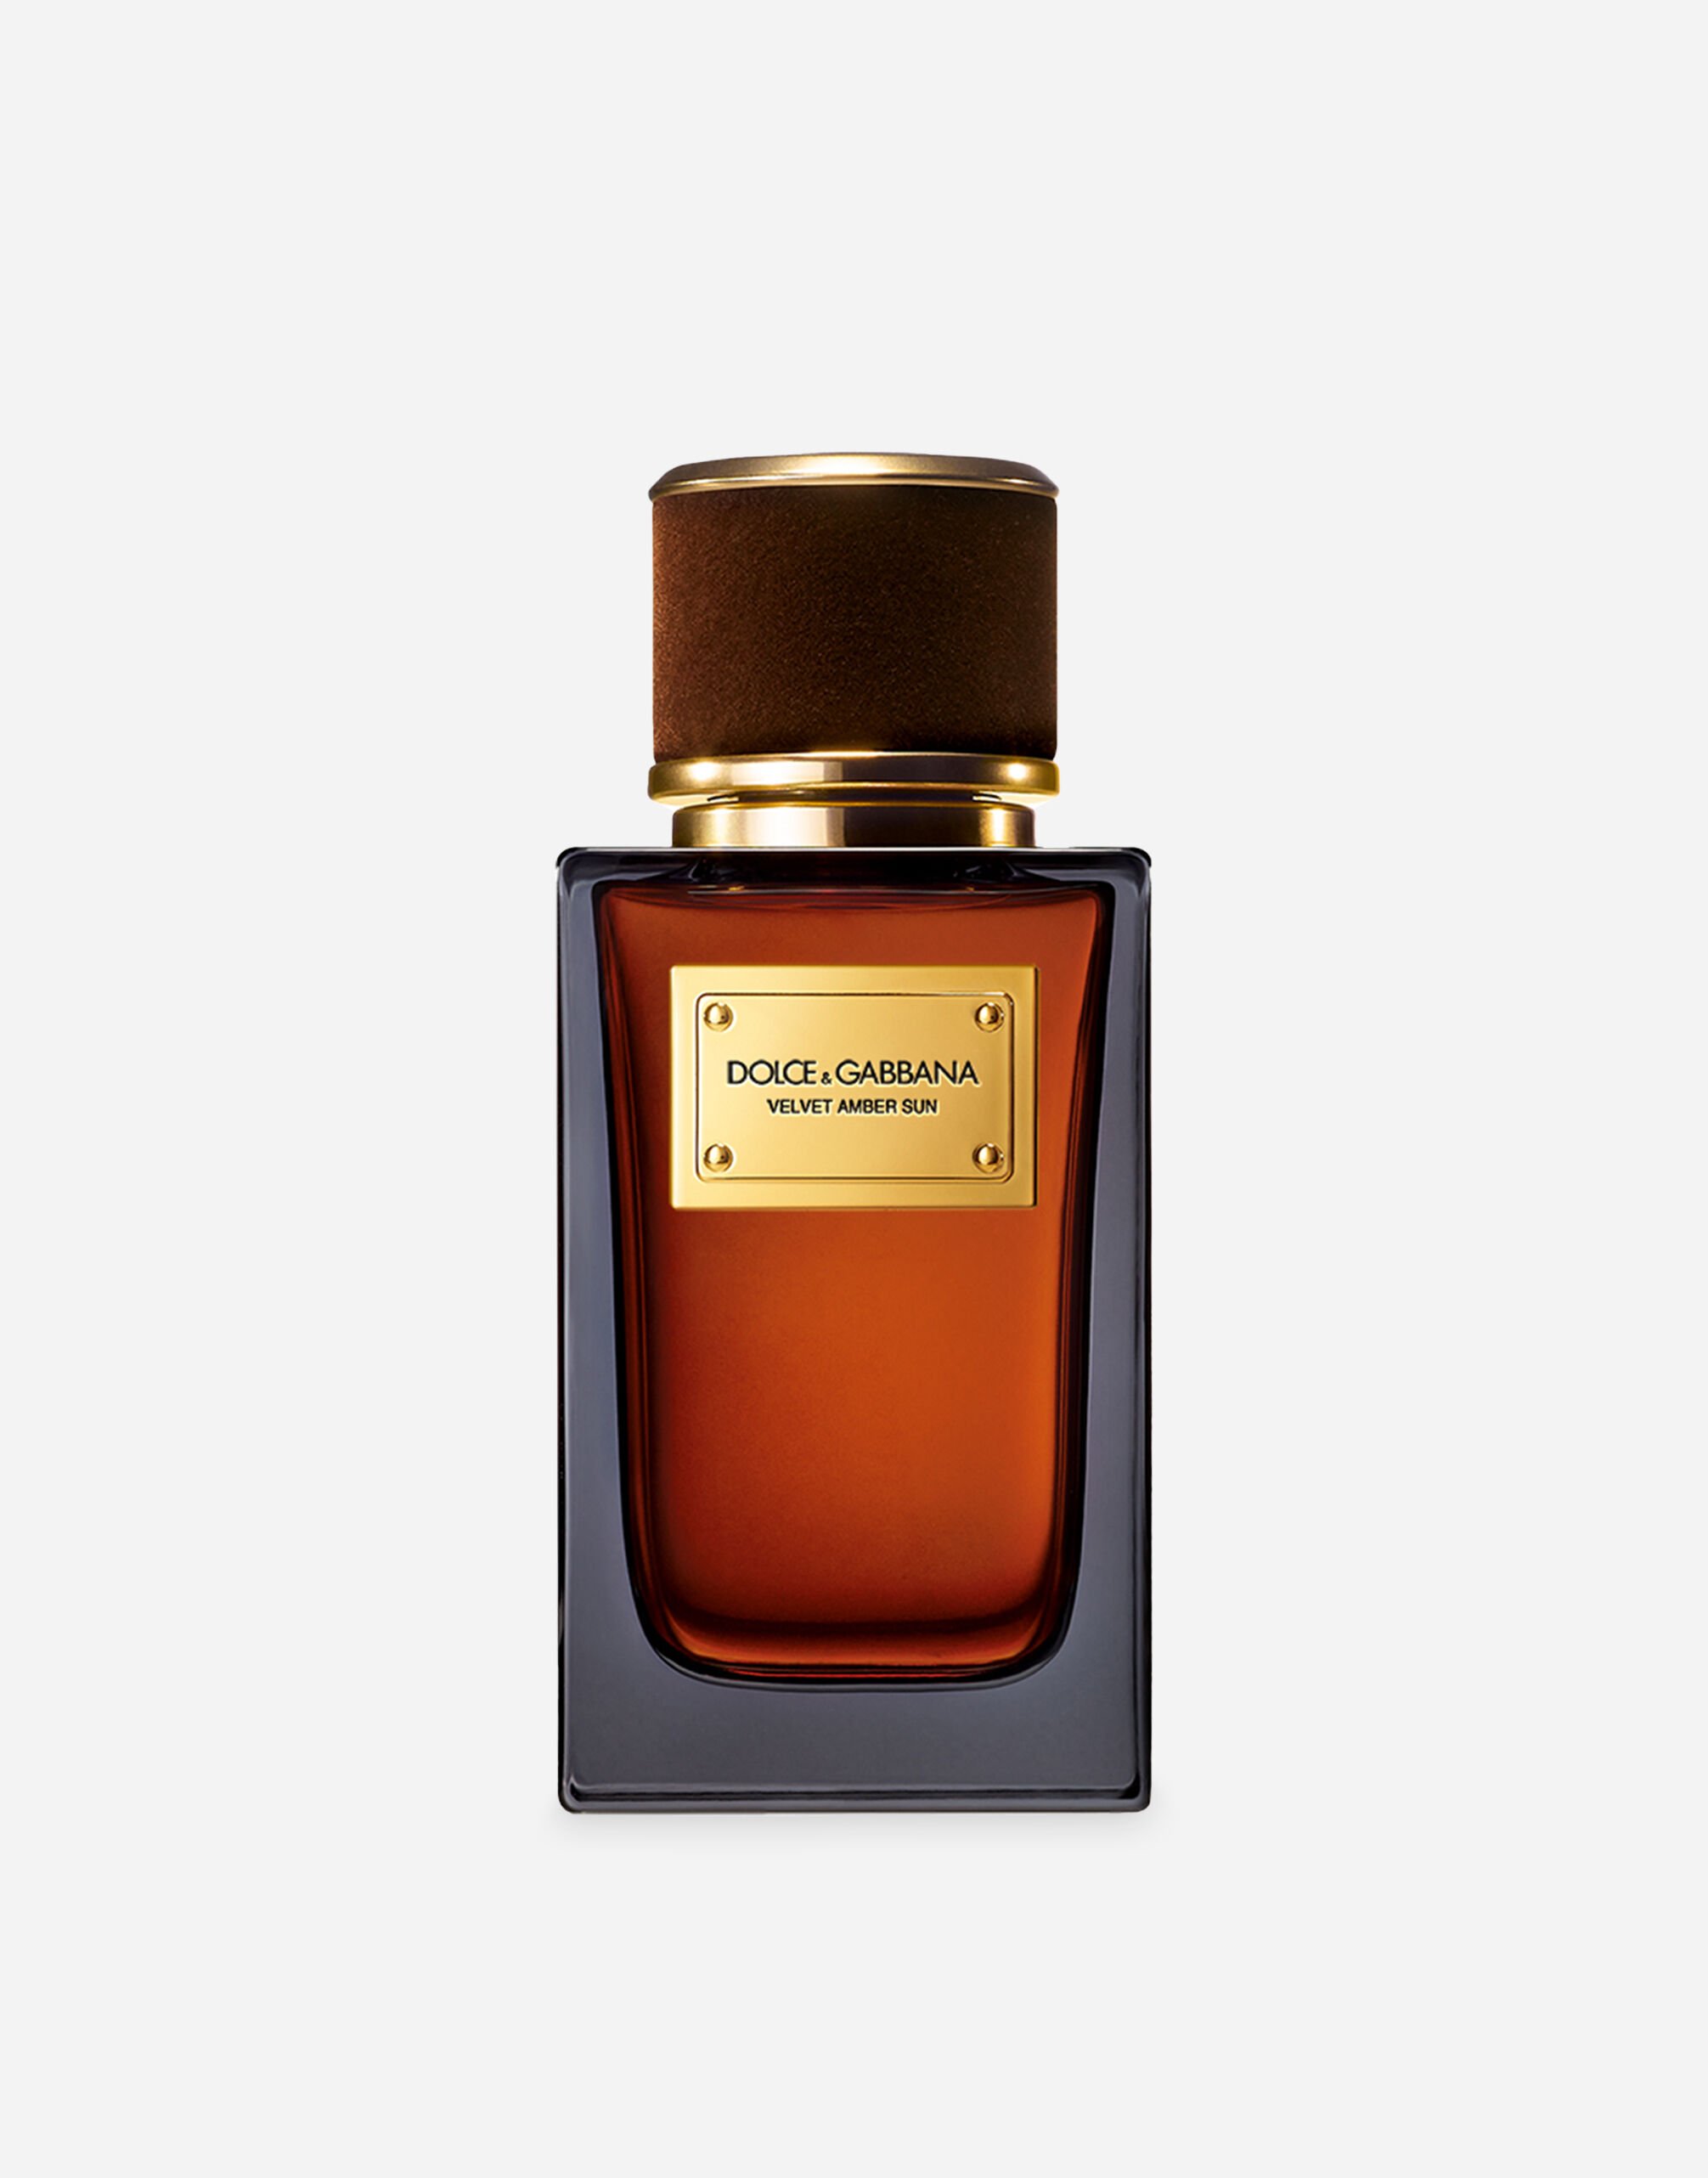 Dolce & Gabbana Velvet Amber Sun Eau de Parfum - VT001KVT000